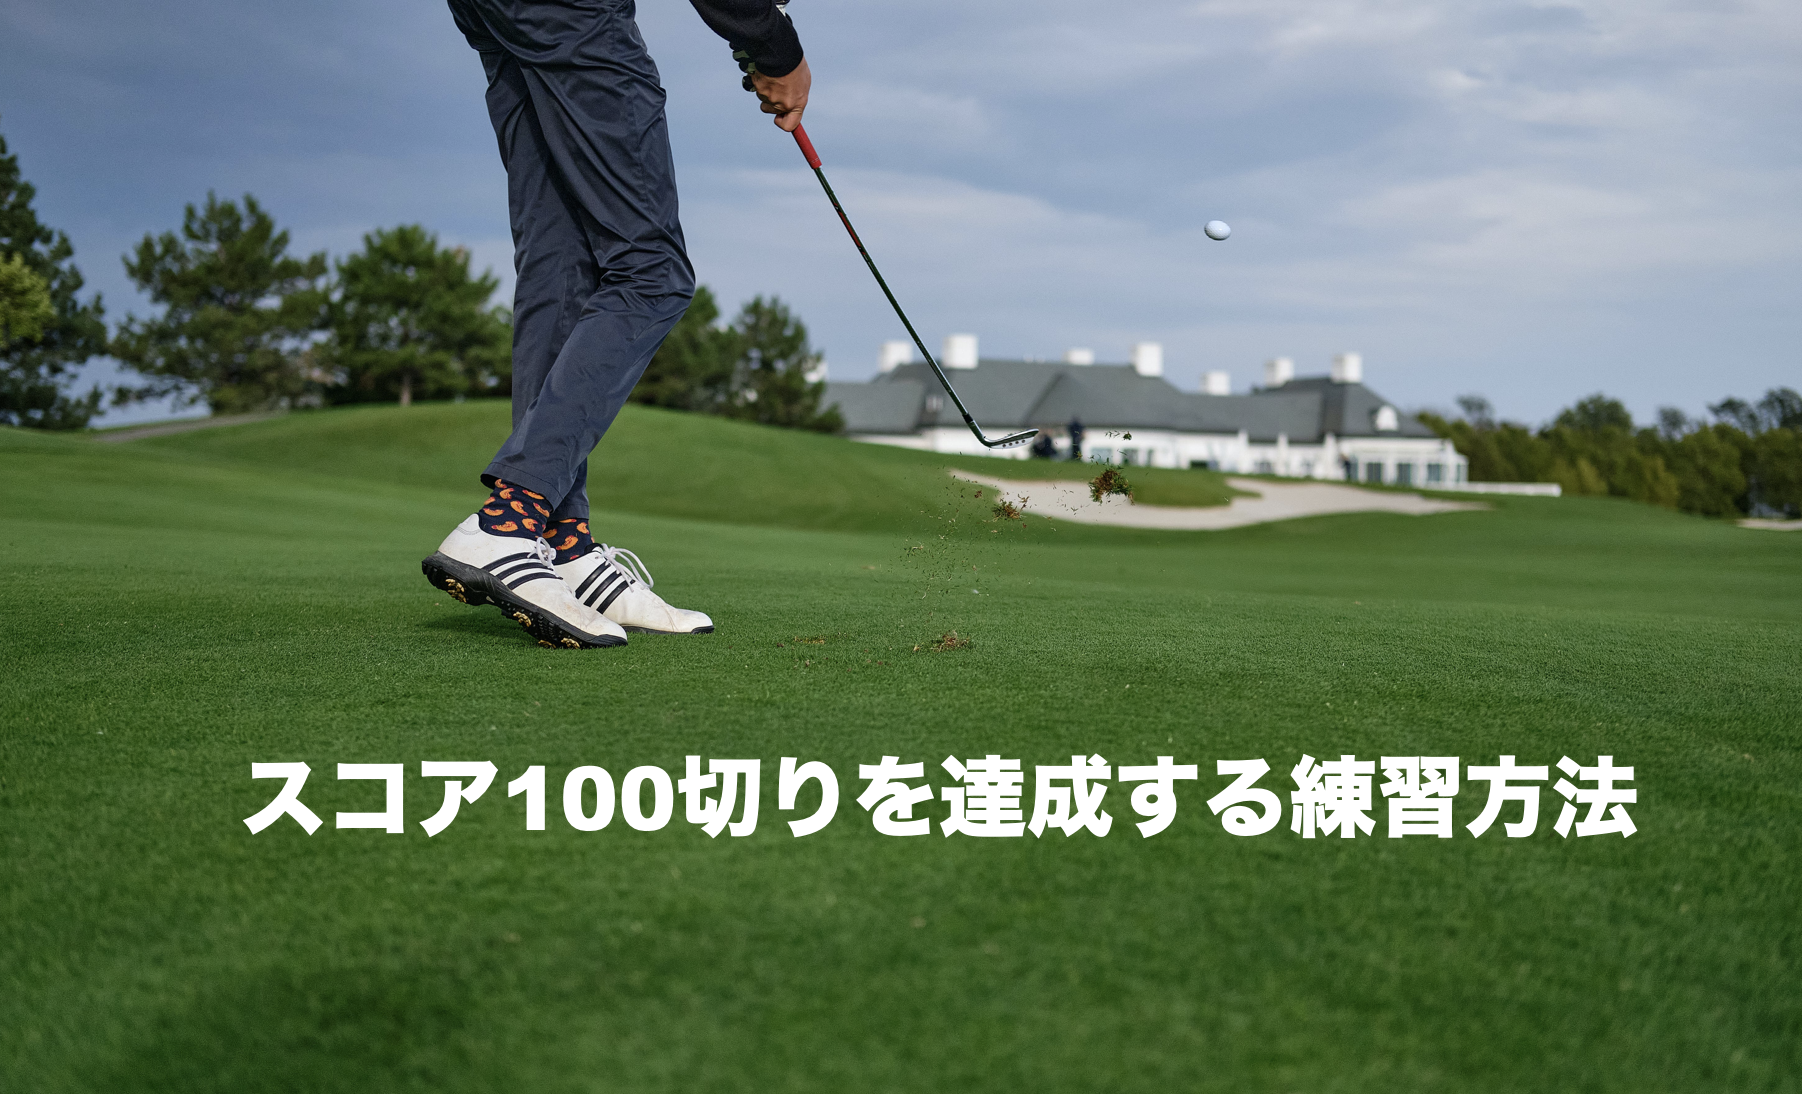 Golf 100 cut practice